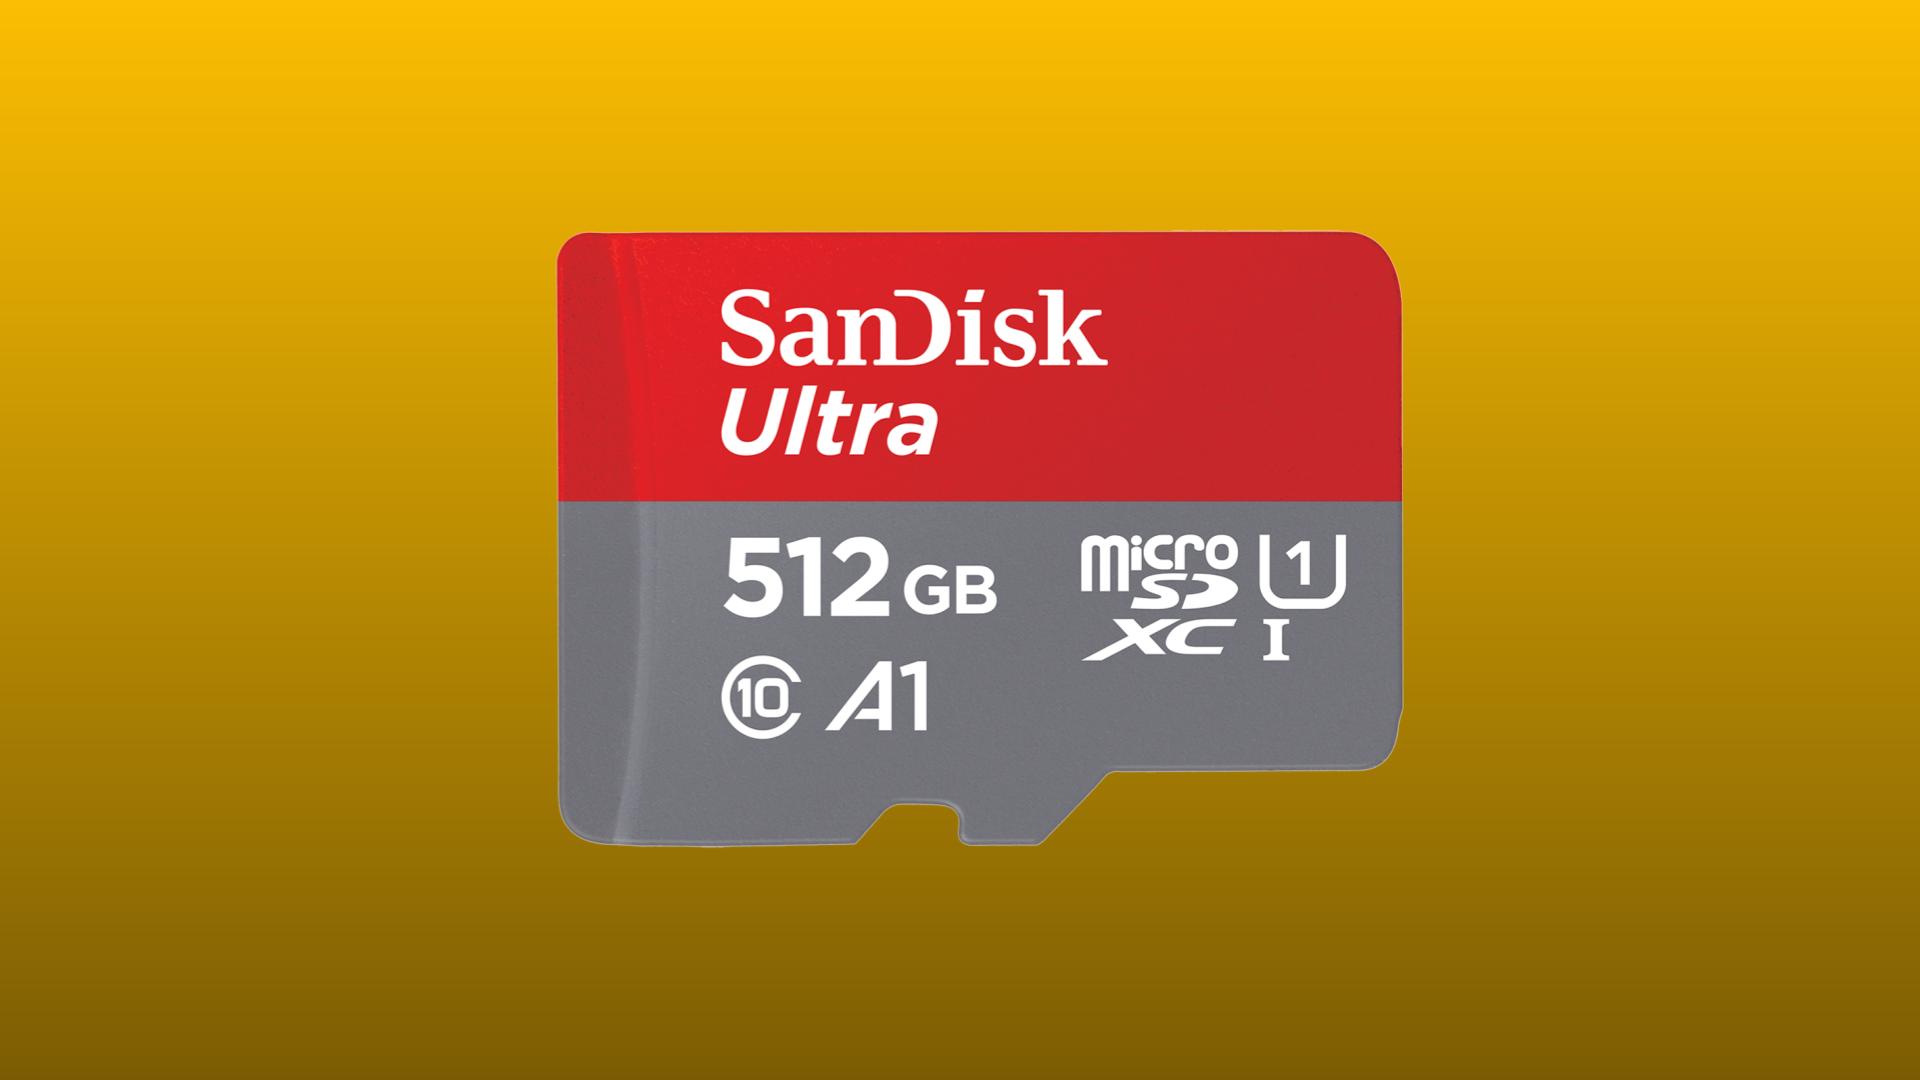 Carte mémoire 4 Go SANDISK Micro SD Ultra Android 4 Go Pas Cher 